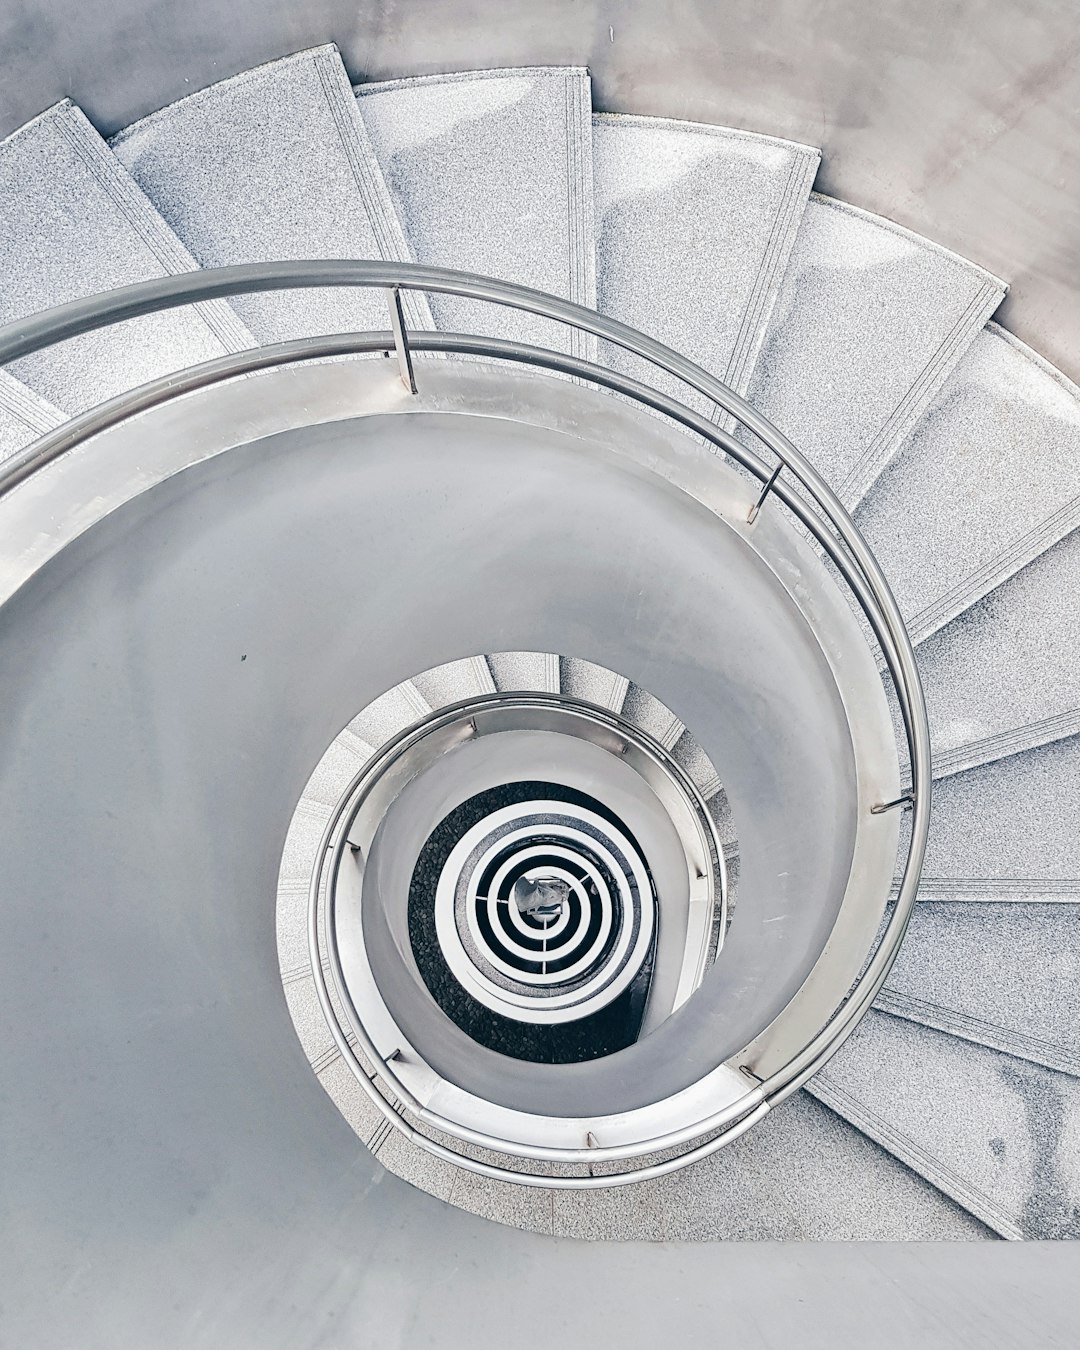 white spiral stairs